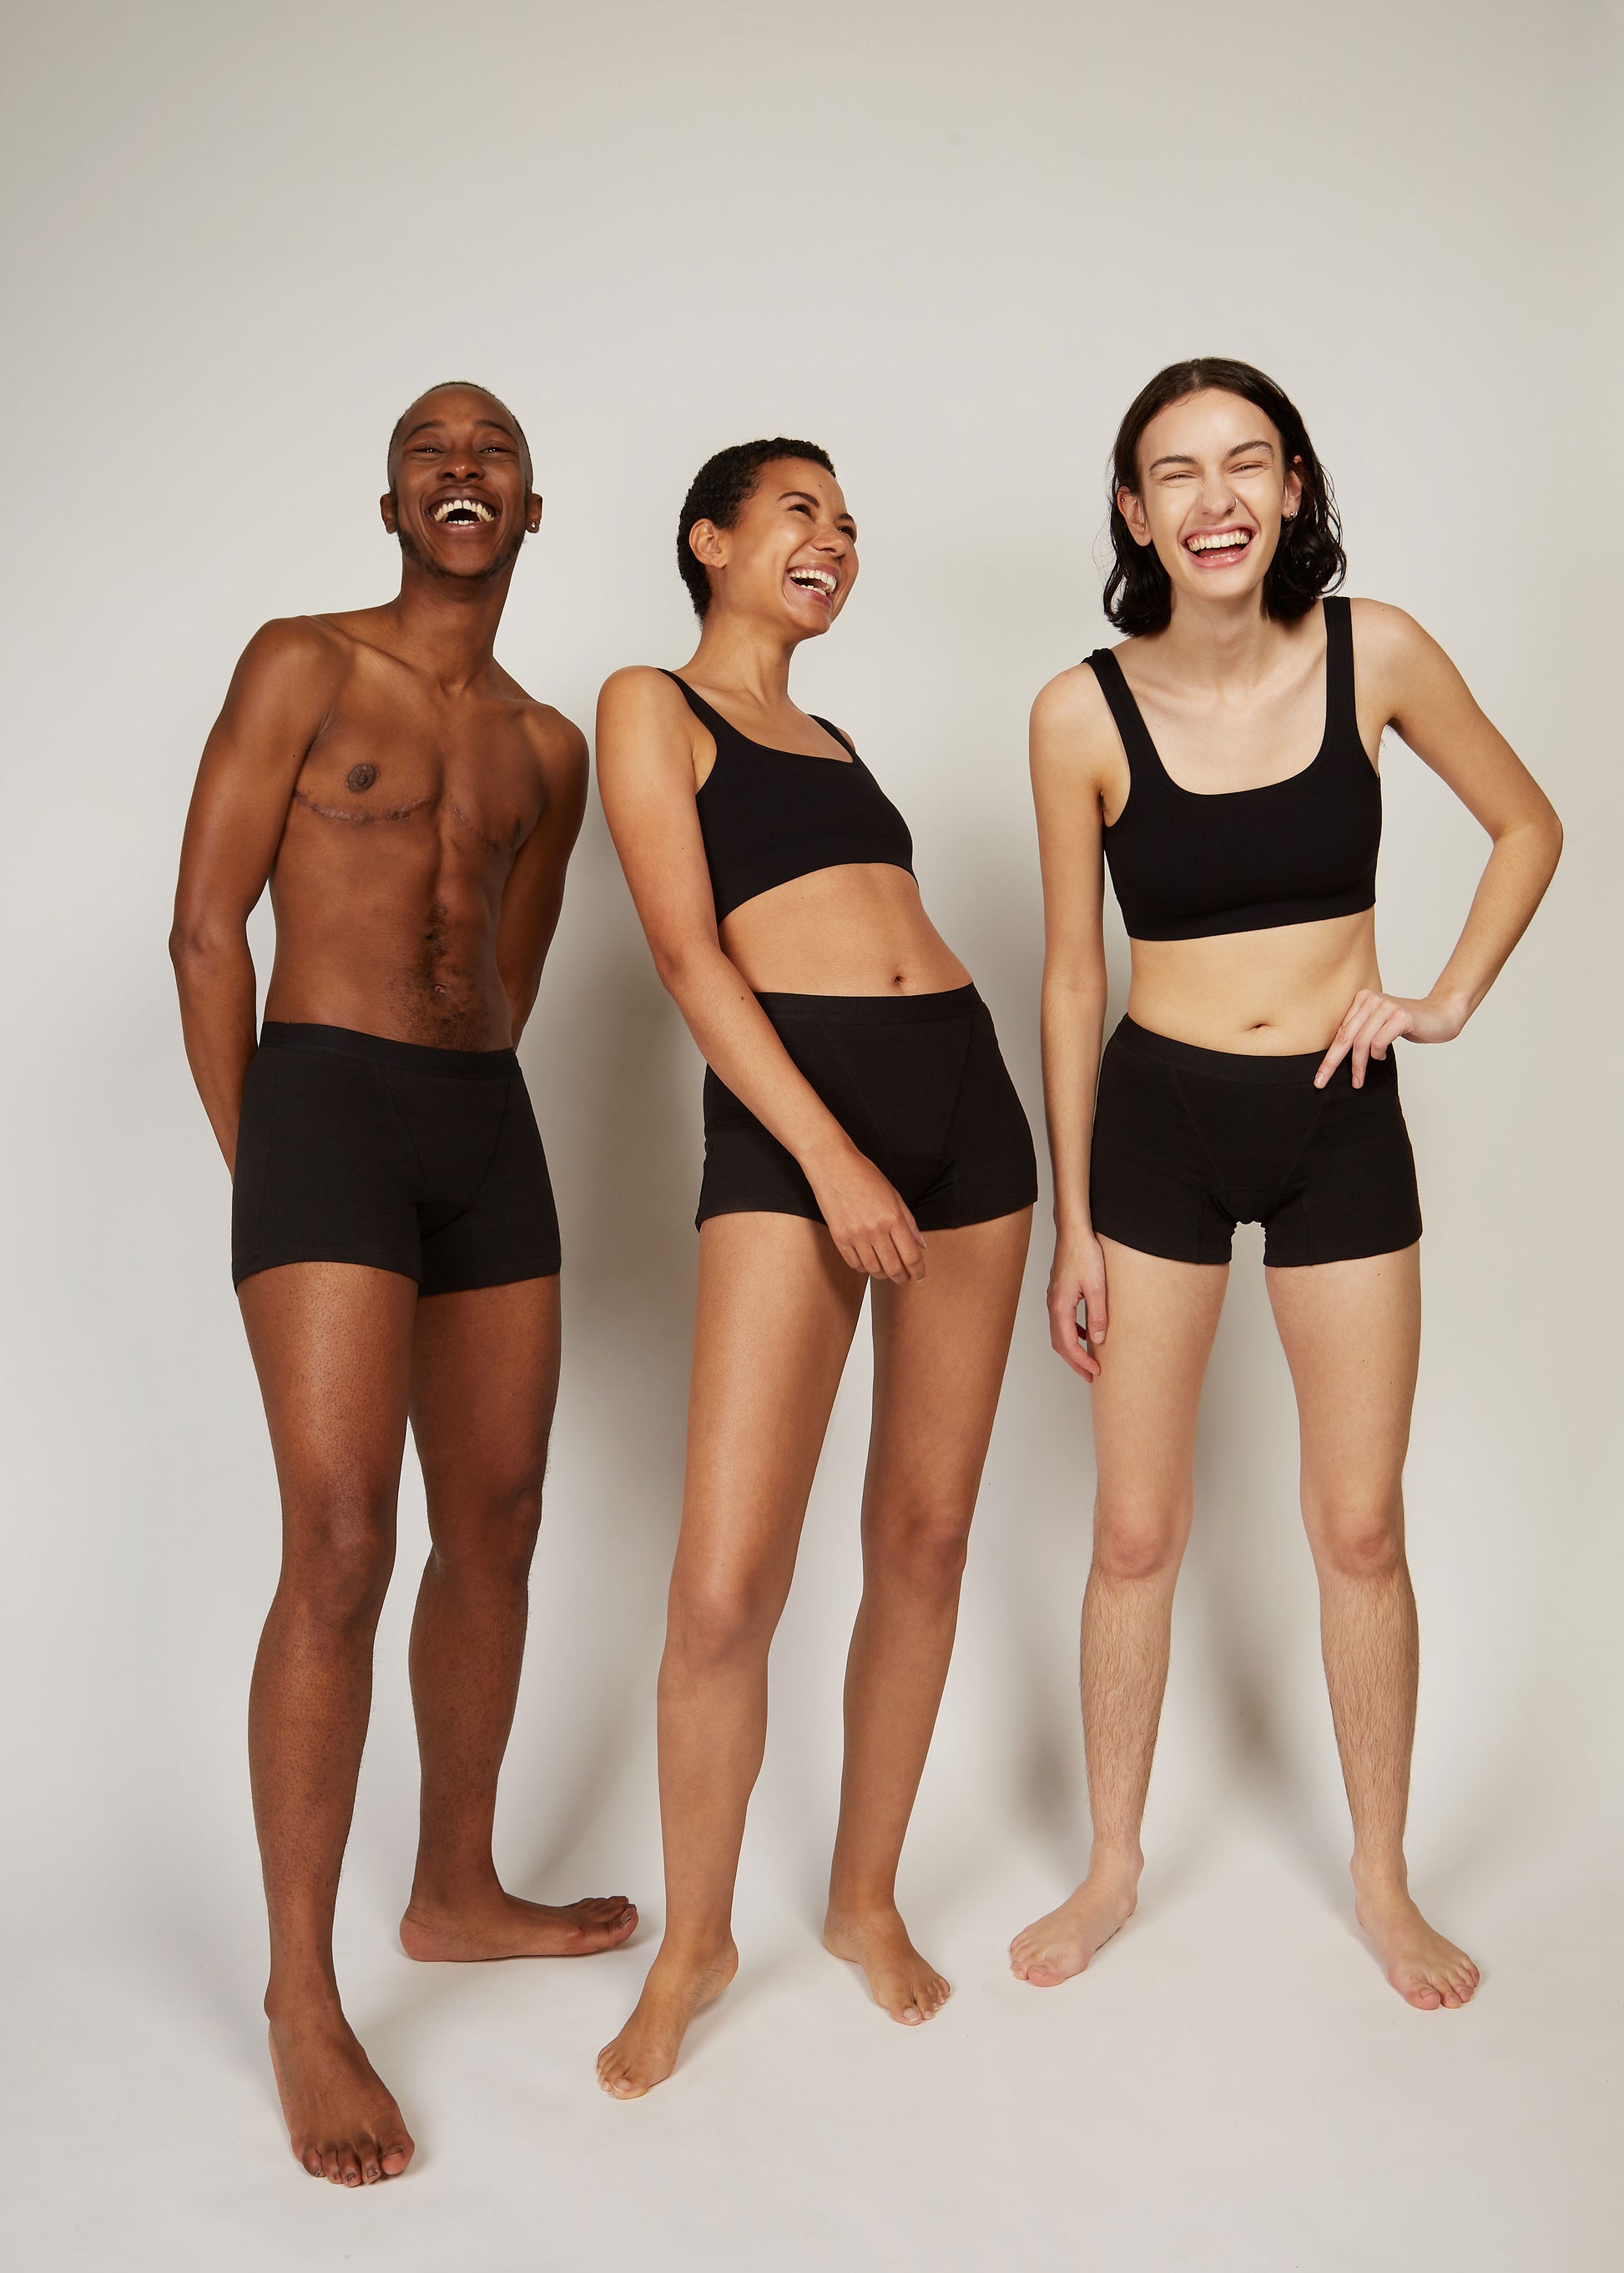 Fluxies Period Underwear - Super Absorbency - Sleep Short – The